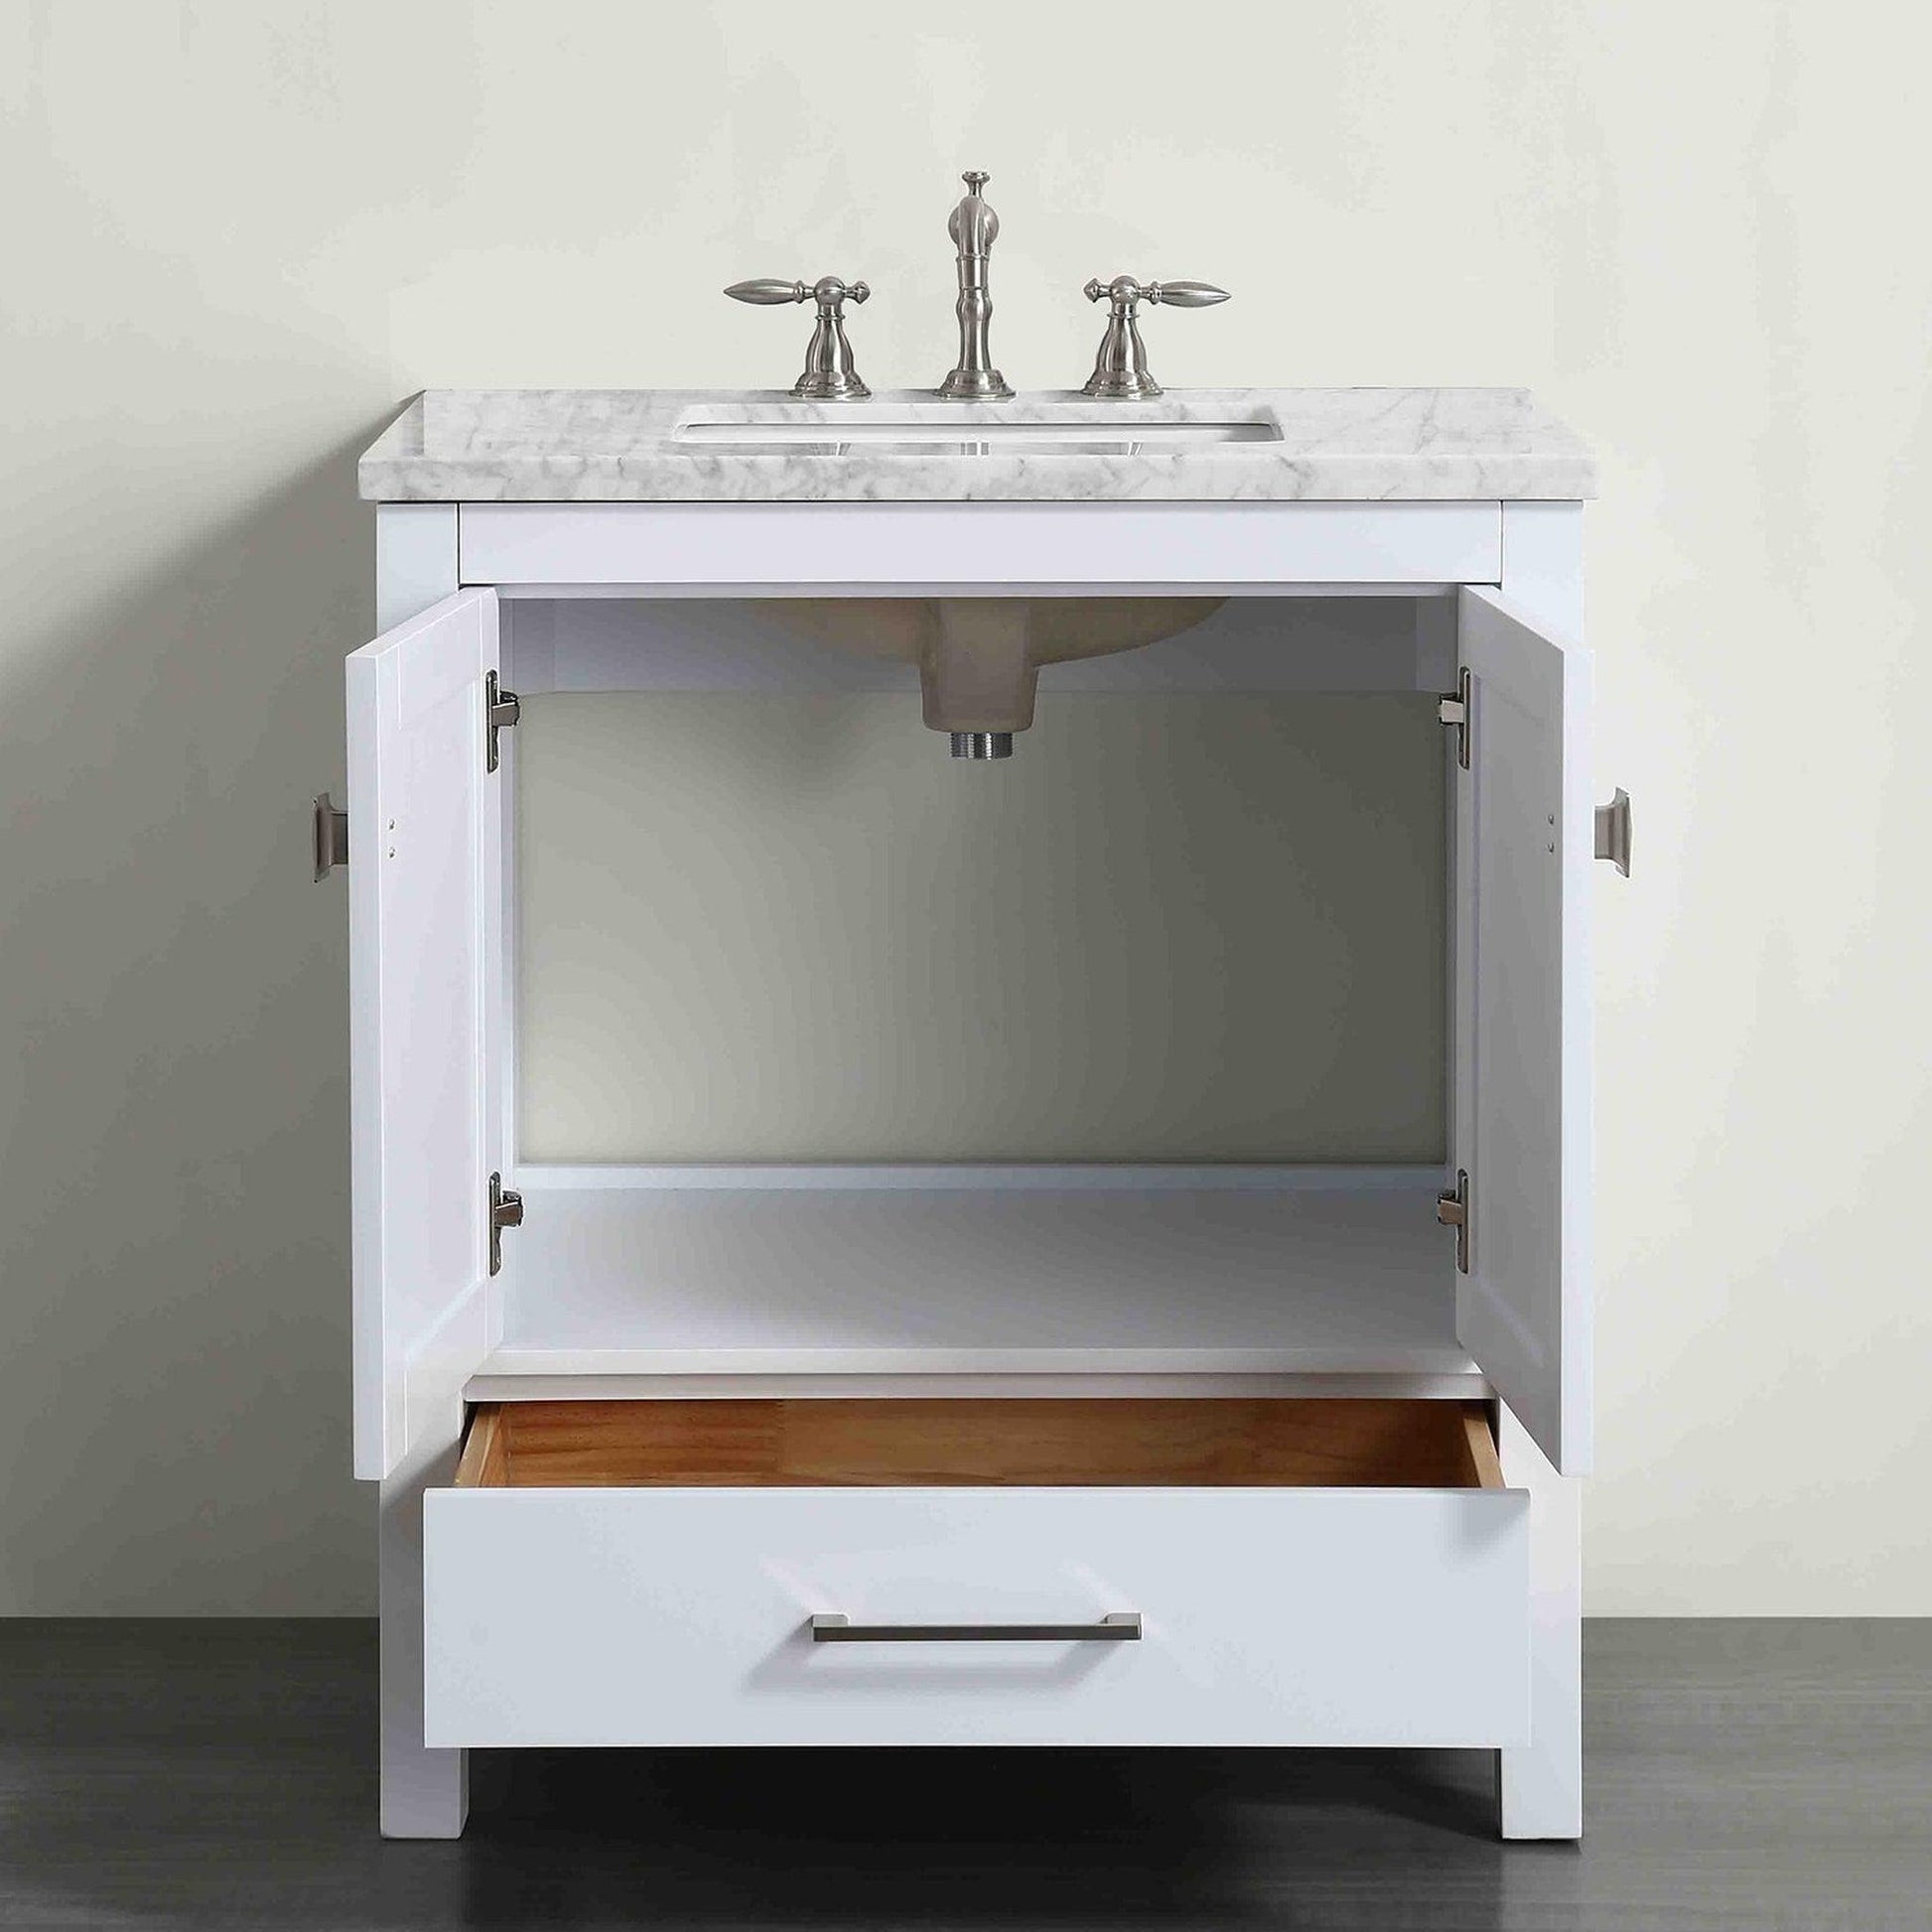 Eviva Aberdeen 30" x 34" White Freestanding Bathroom Vanity With Single Undermount Sink